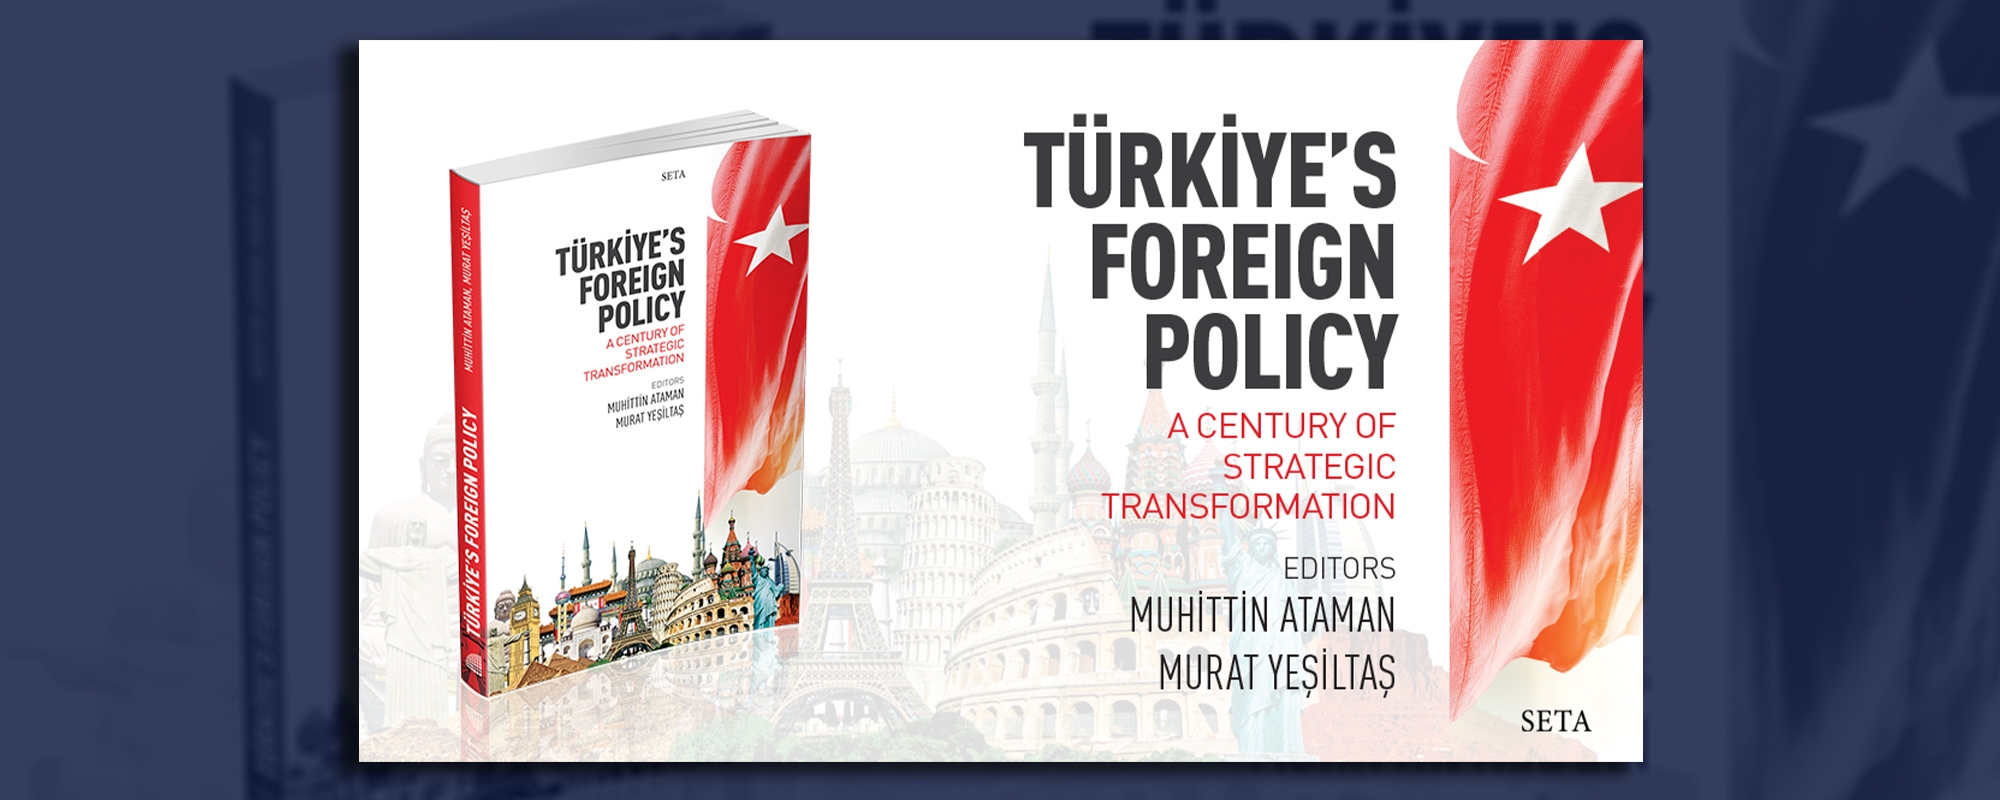 Türkiye's Foreign Policy A Century of Strategic Transformation